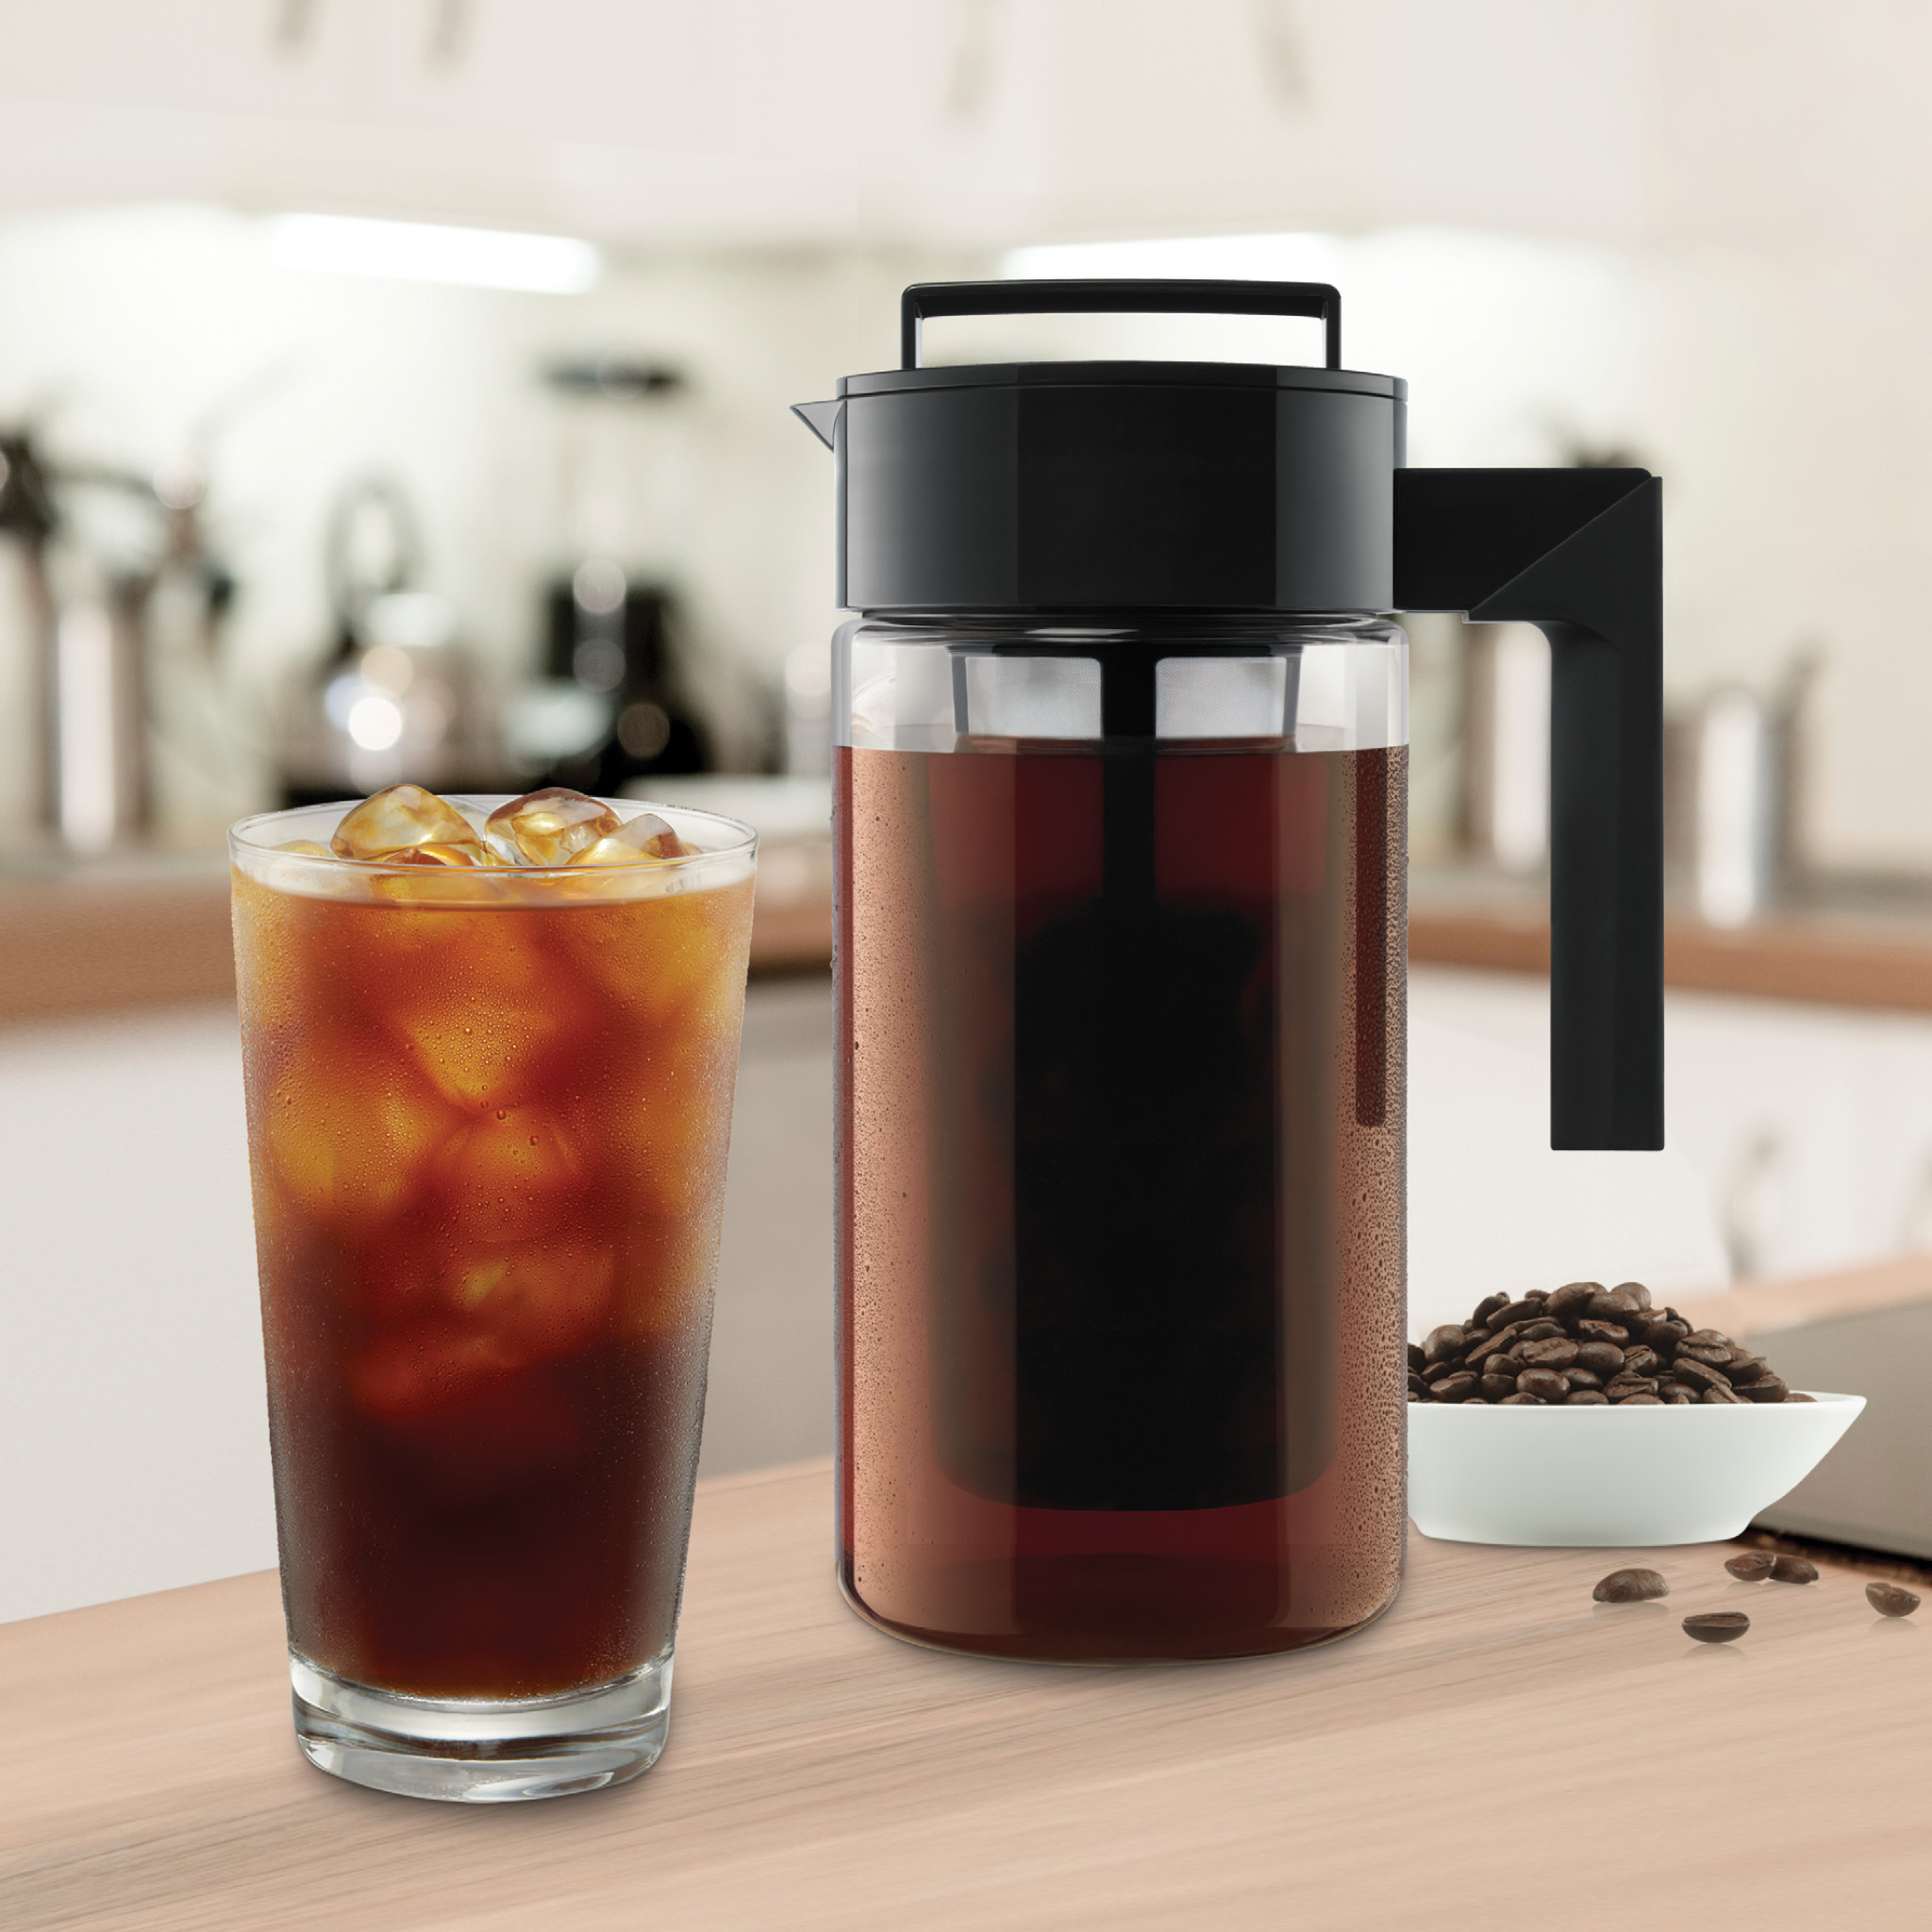 Takeya Cold Brew Tritan Plastic Coffee Maker Pitcher with Airtight Lid, 1 Quart, Black - image 5 of 7